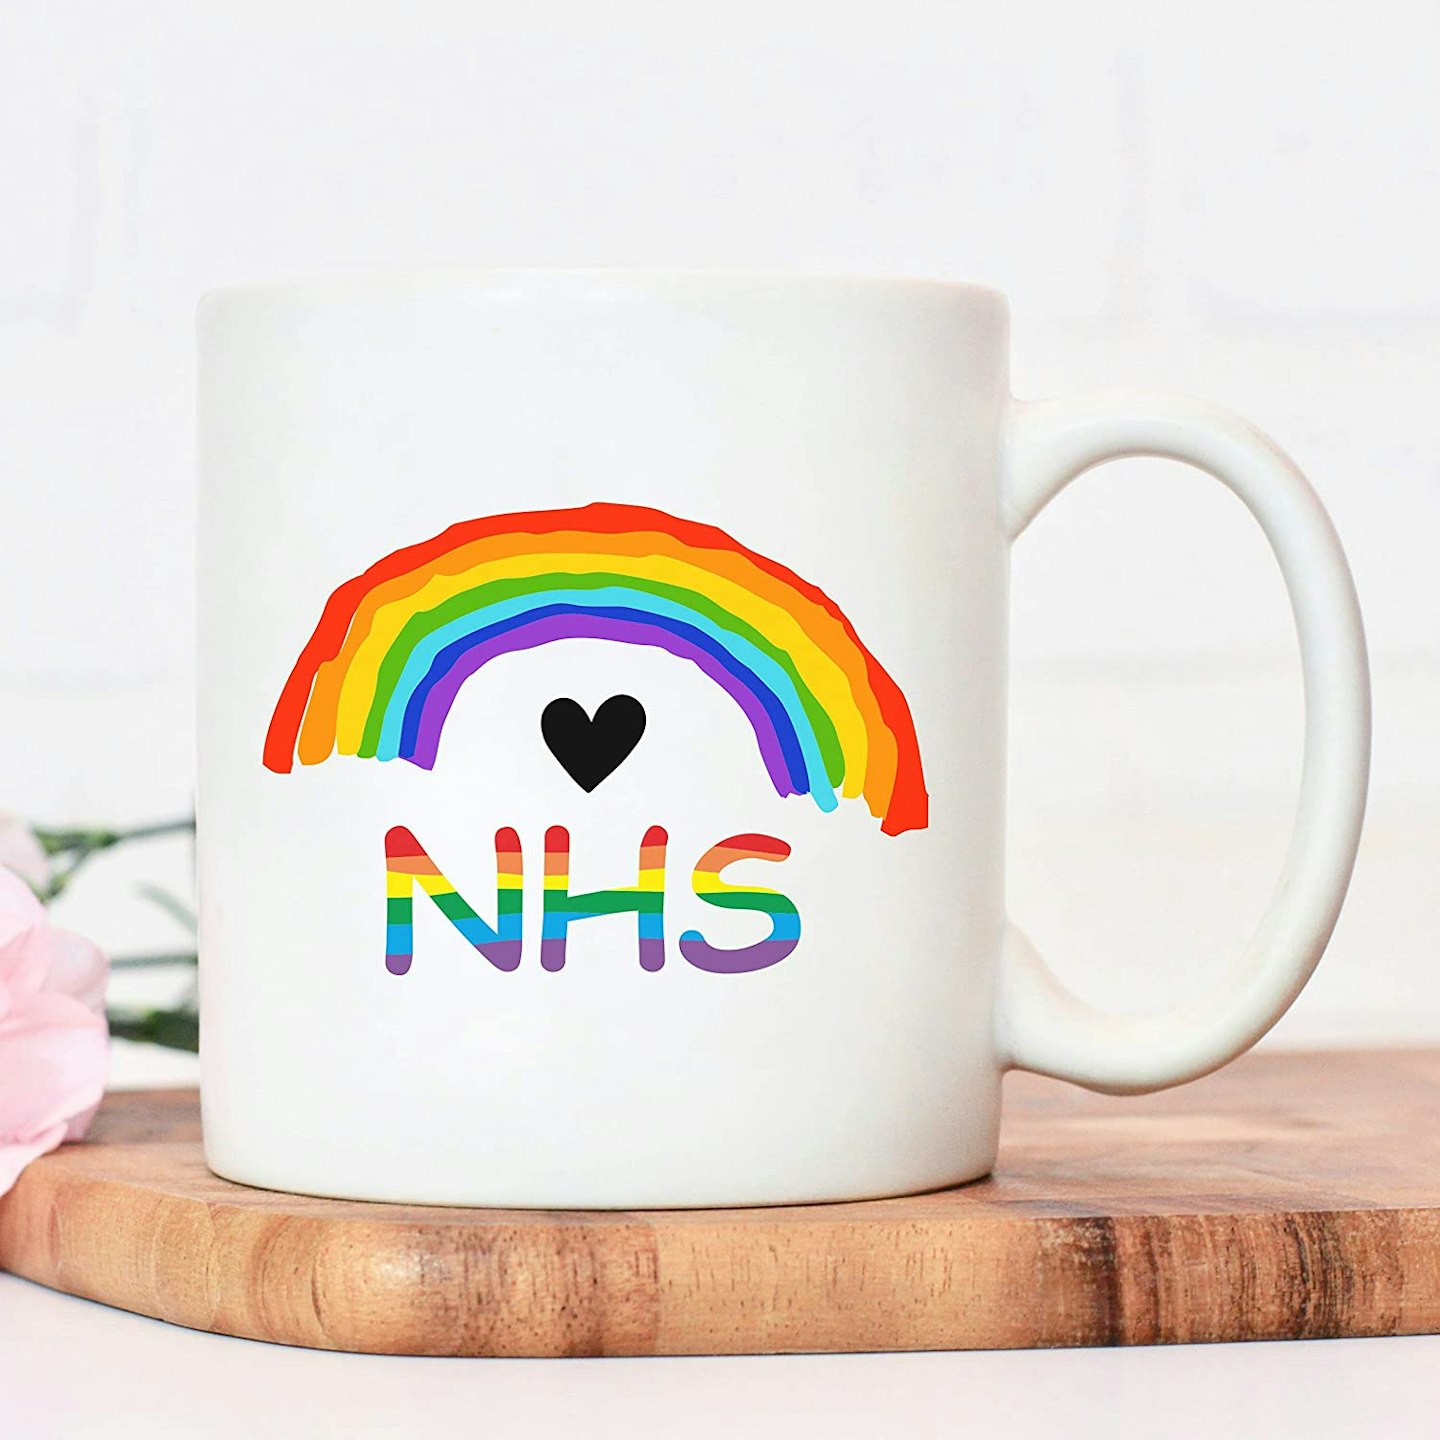 Support NHS Mug